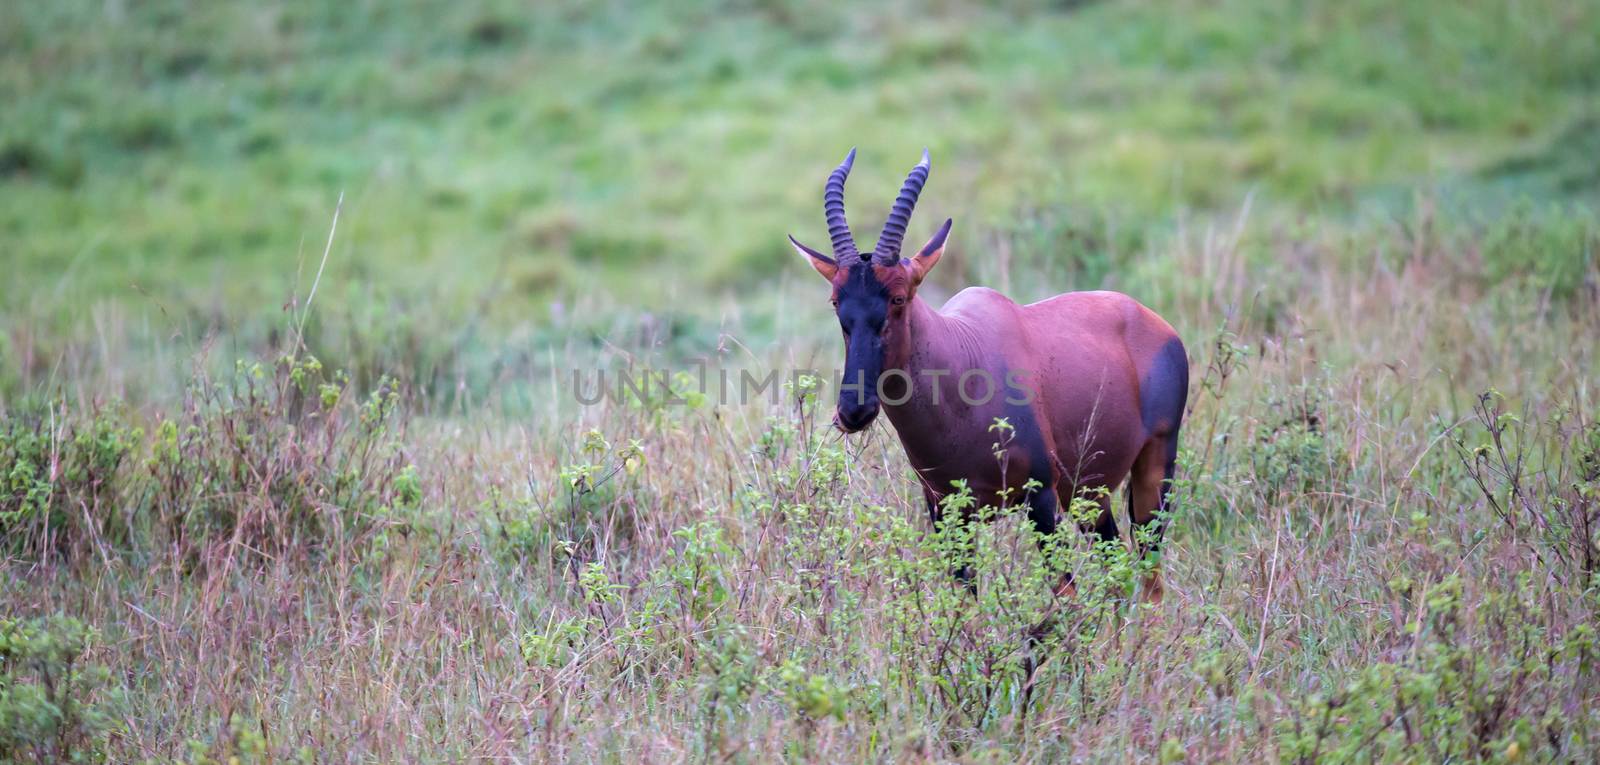 Topi antelope in the grassland of Kenya's savannah by 25ehaag6